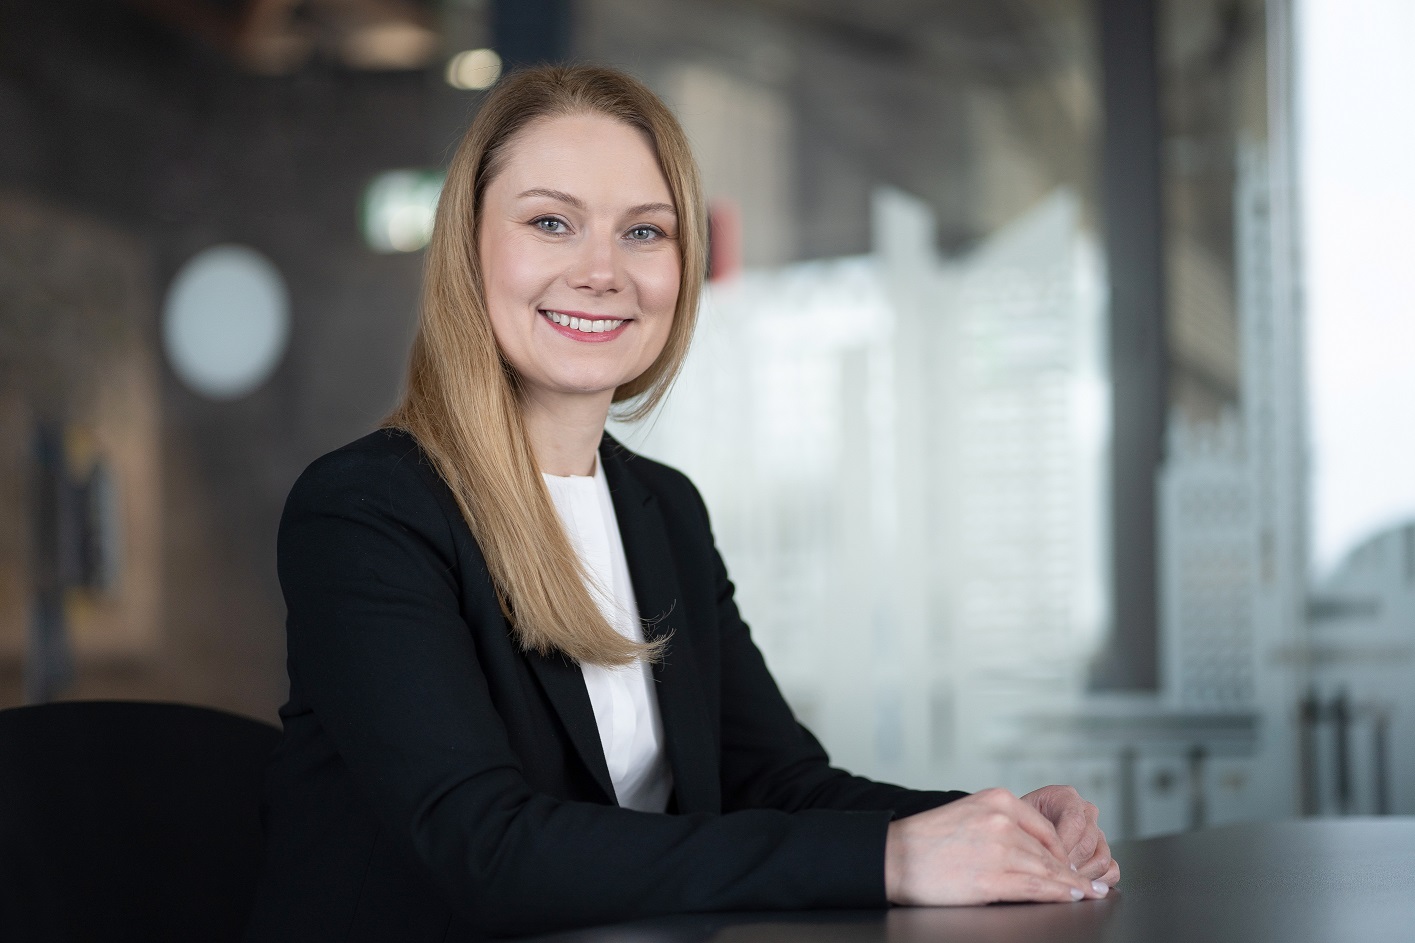 Karolina Furmańska joins the PRS team of Cushman & Wakefield